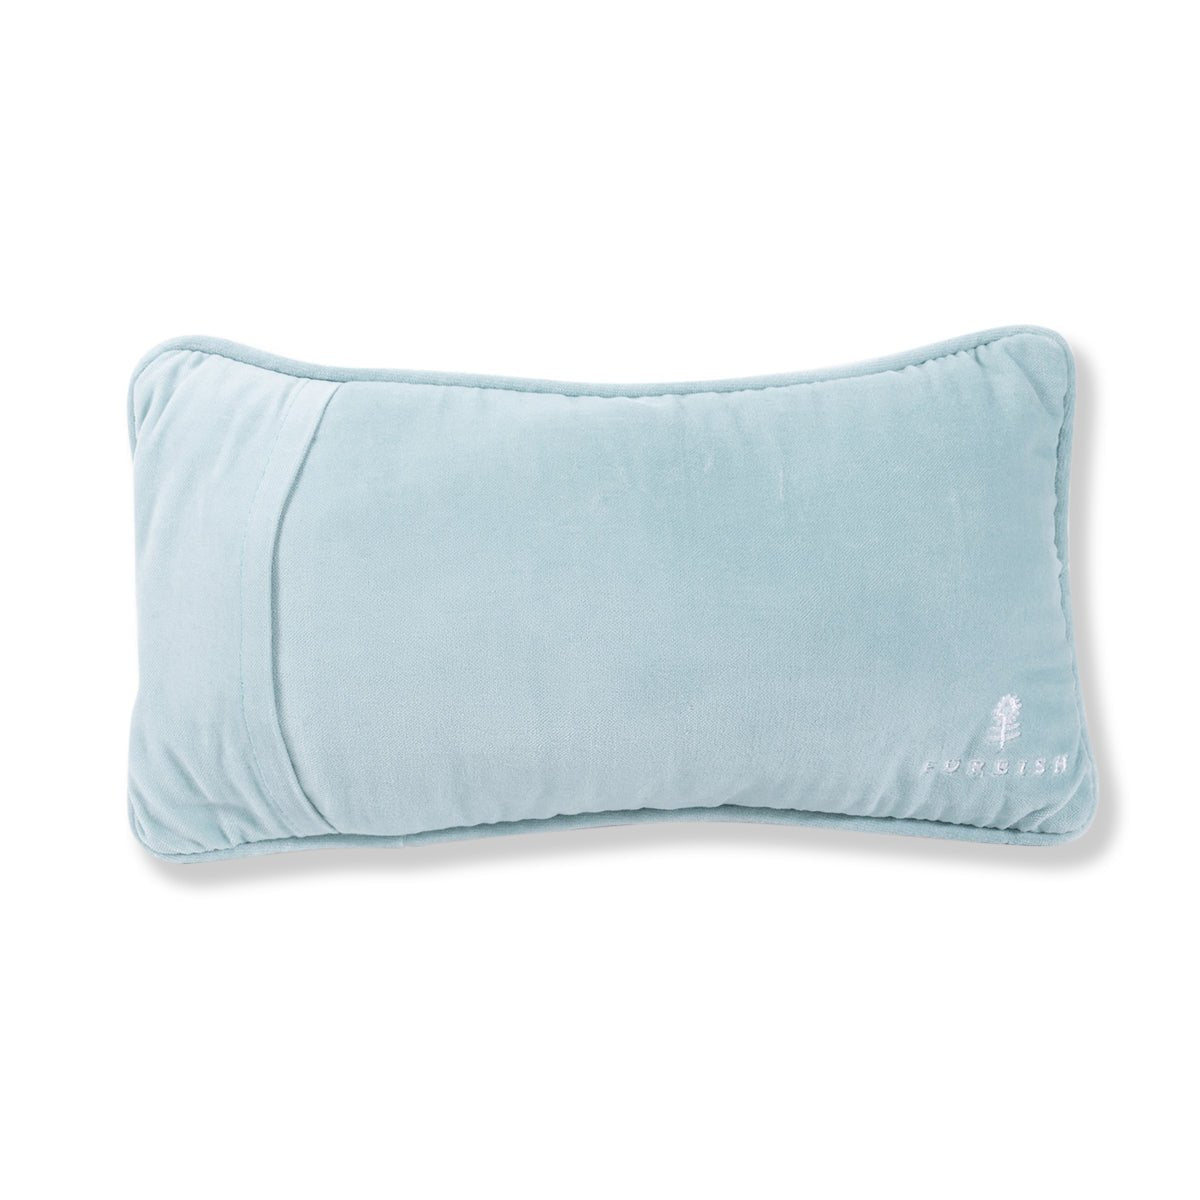 Gossip Needlepoint Pillow - Throw Pillows - Furbish Studio - The Grove